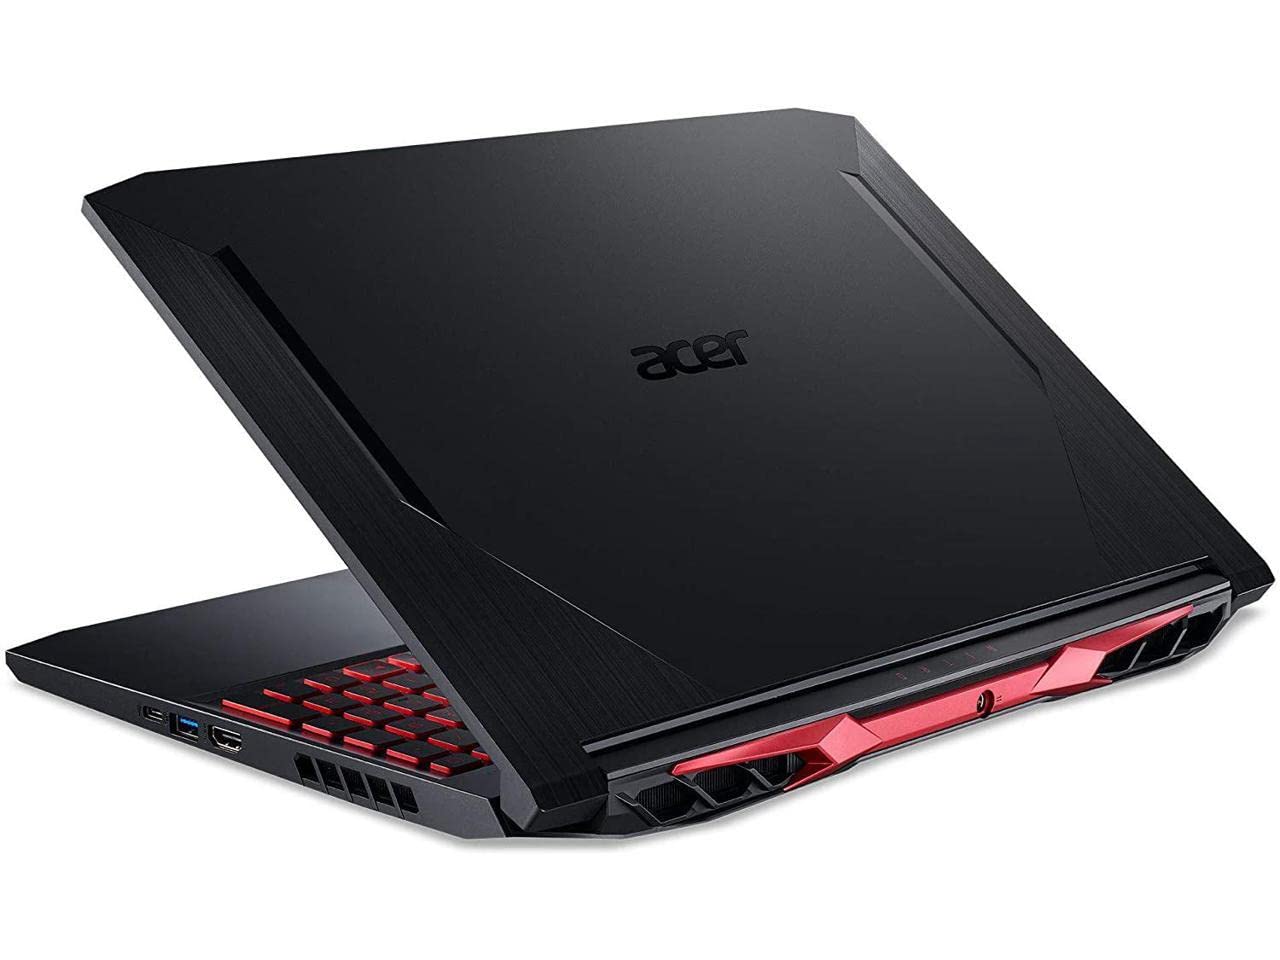 acer Nitro 5 15.6" 144Hz FHD Gaming Laptop, AMD Ryzen 5 4600H, 12GB DDR4, 512GB SSD, GTX 1650, Windows 10 Home